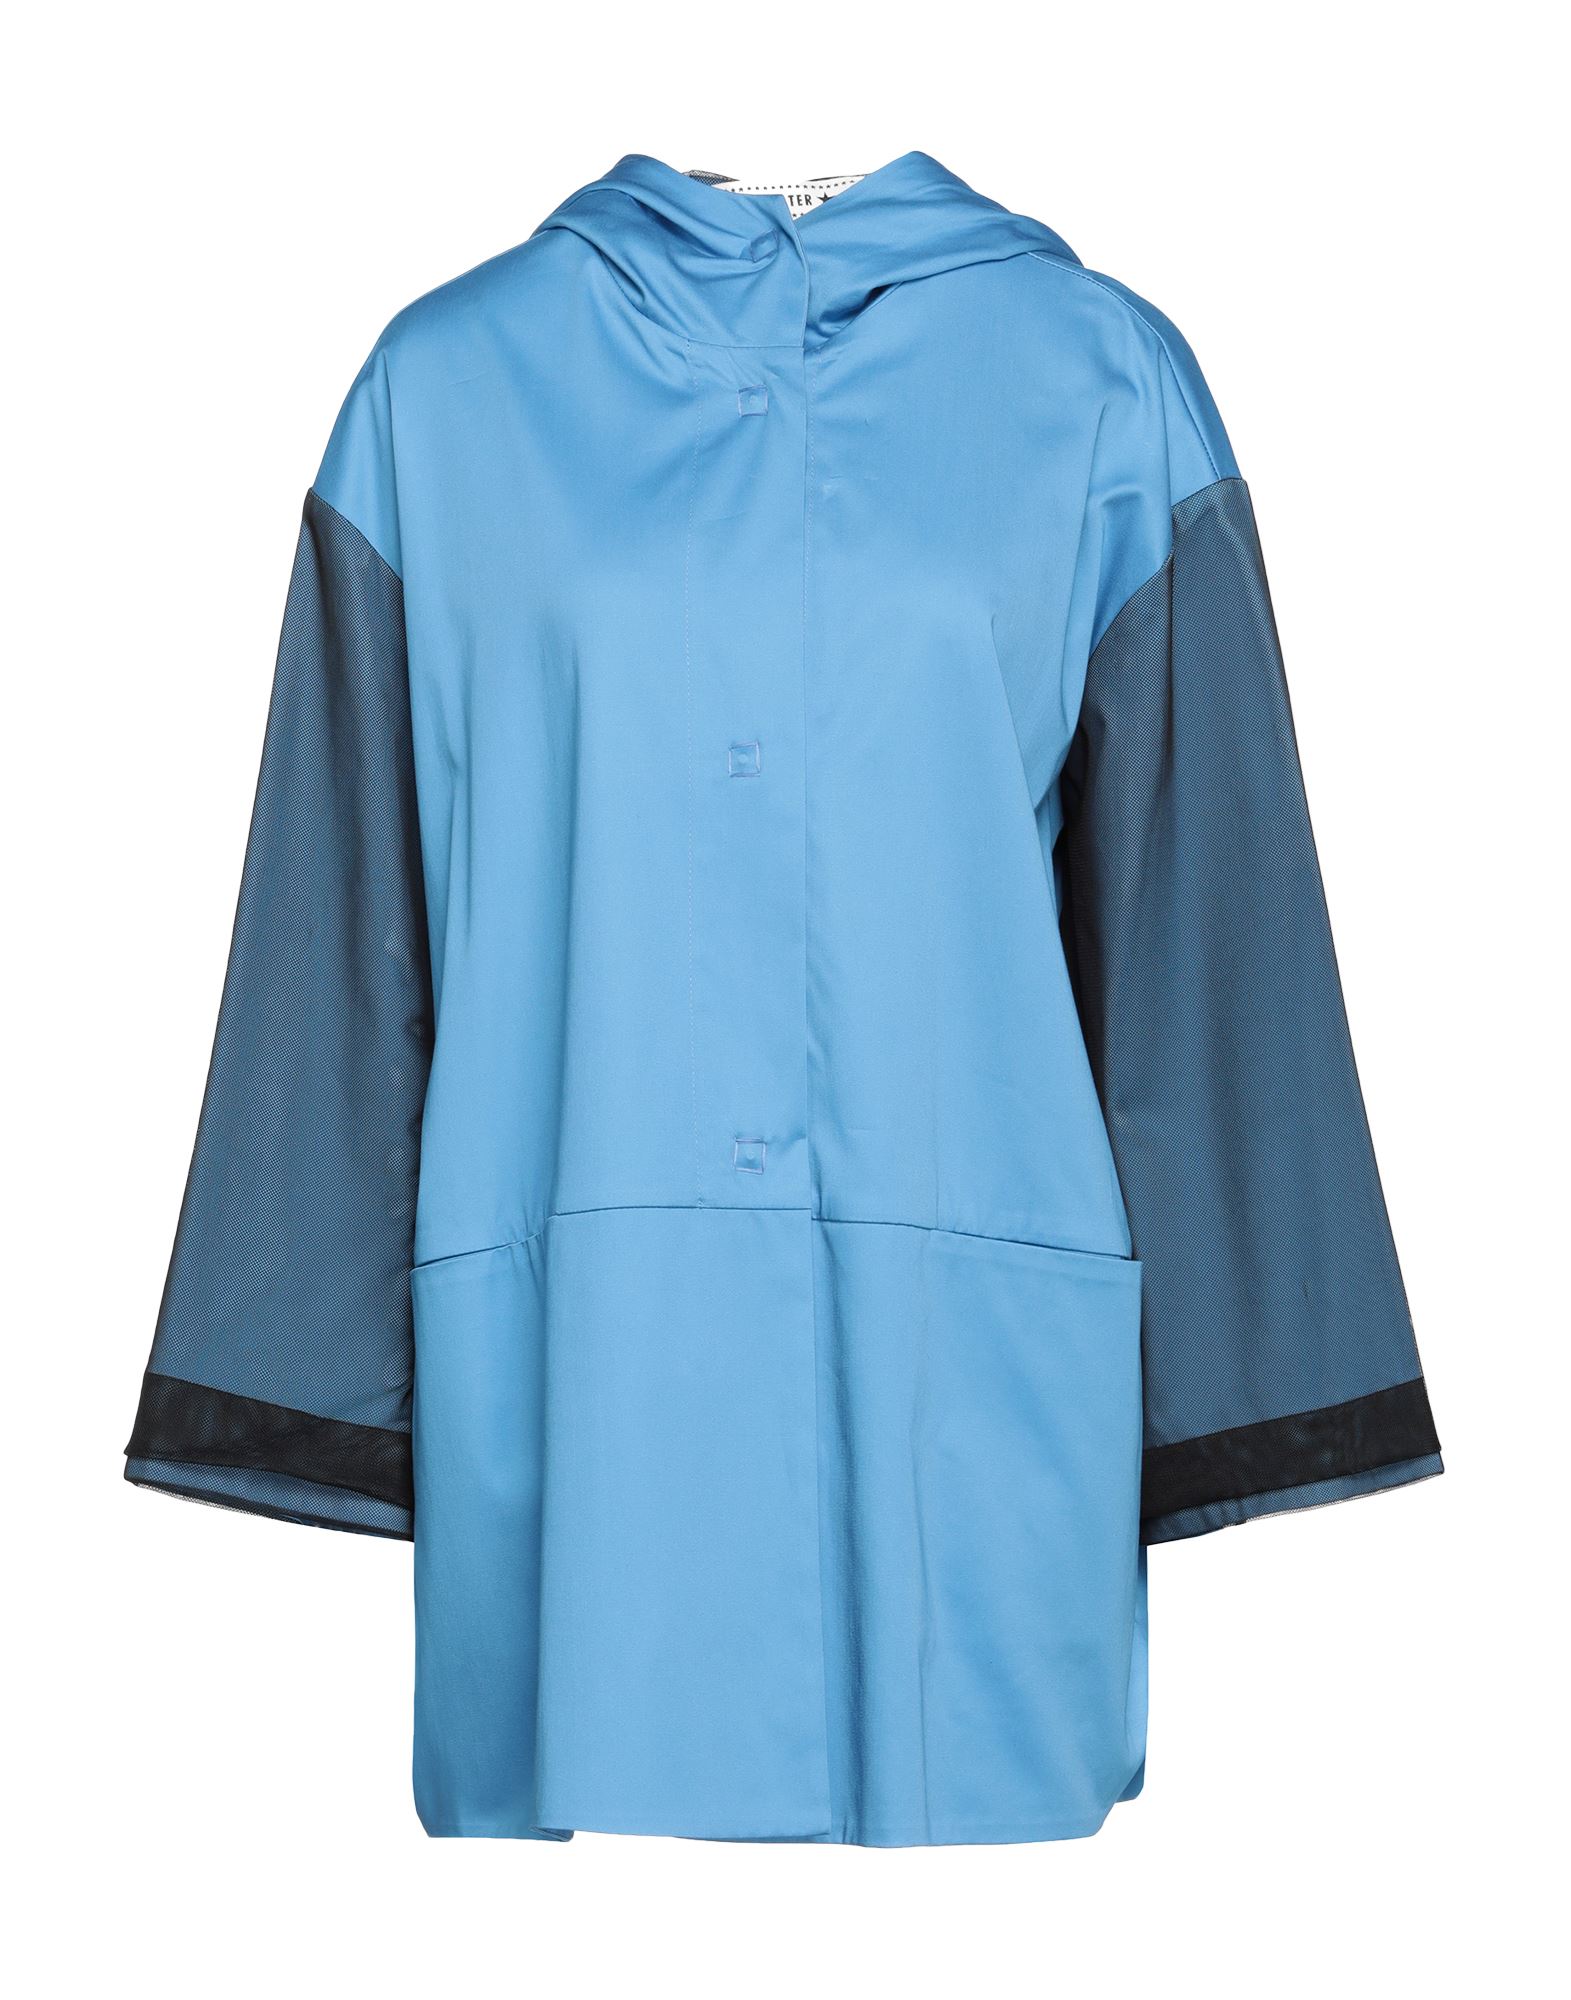 Shirtaporter Overcoats In Blue